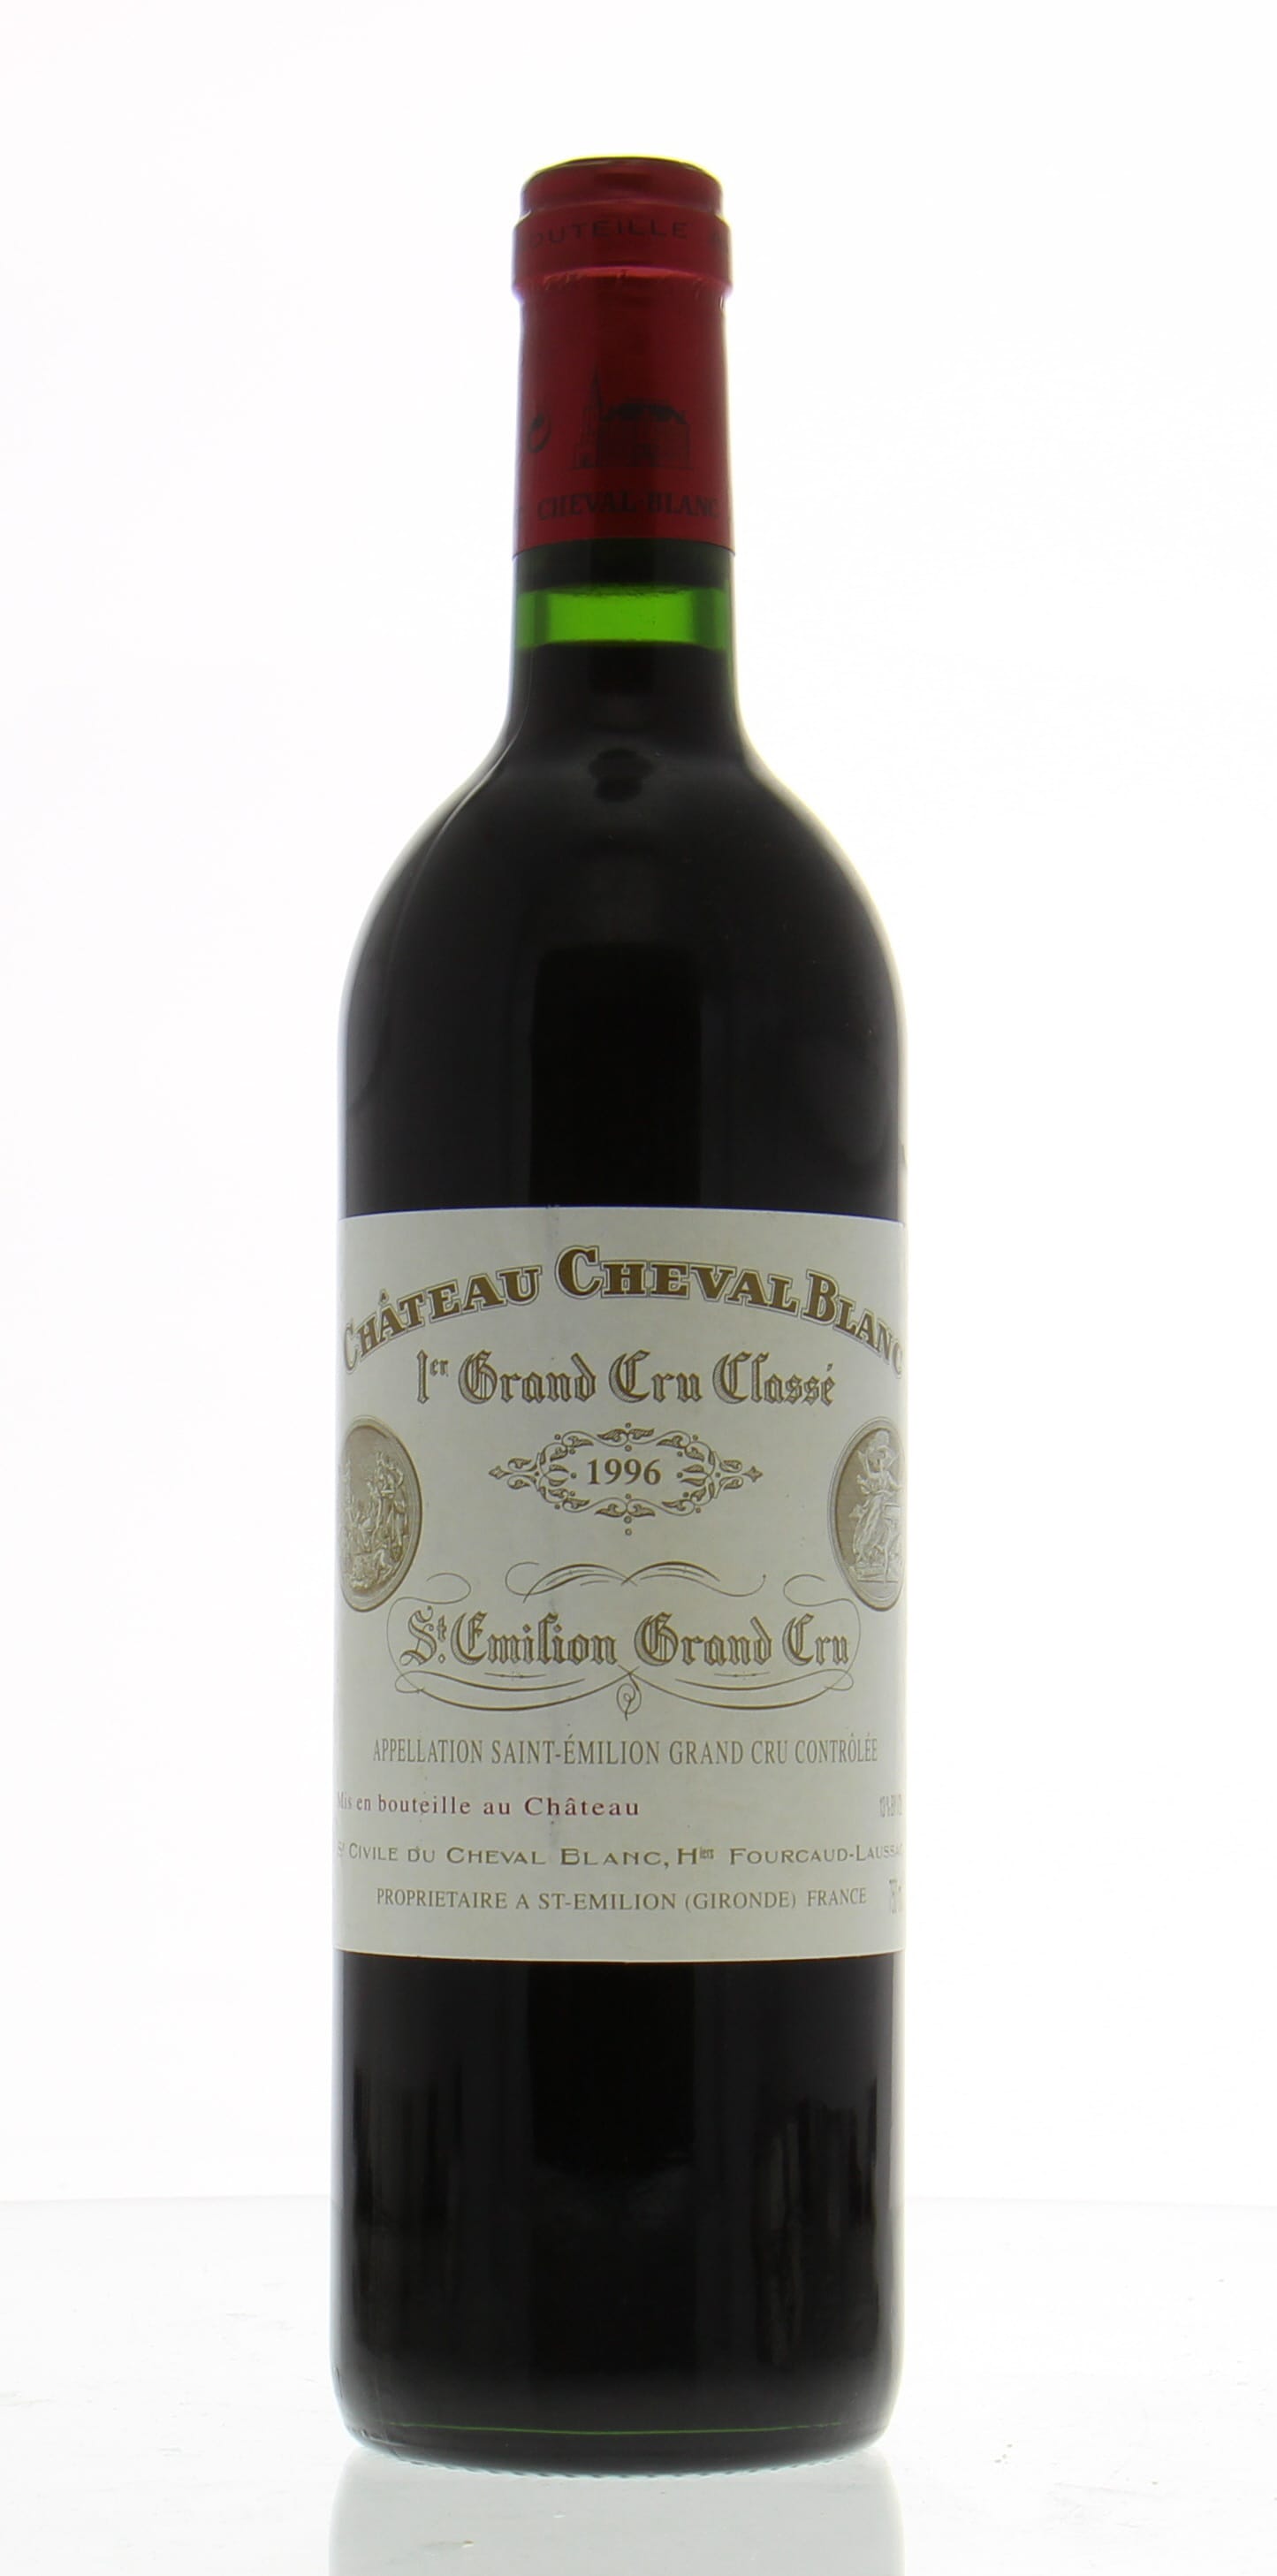 Chateau Cheval Blanc - Chateau Cheval Blanc 1996 Perfect